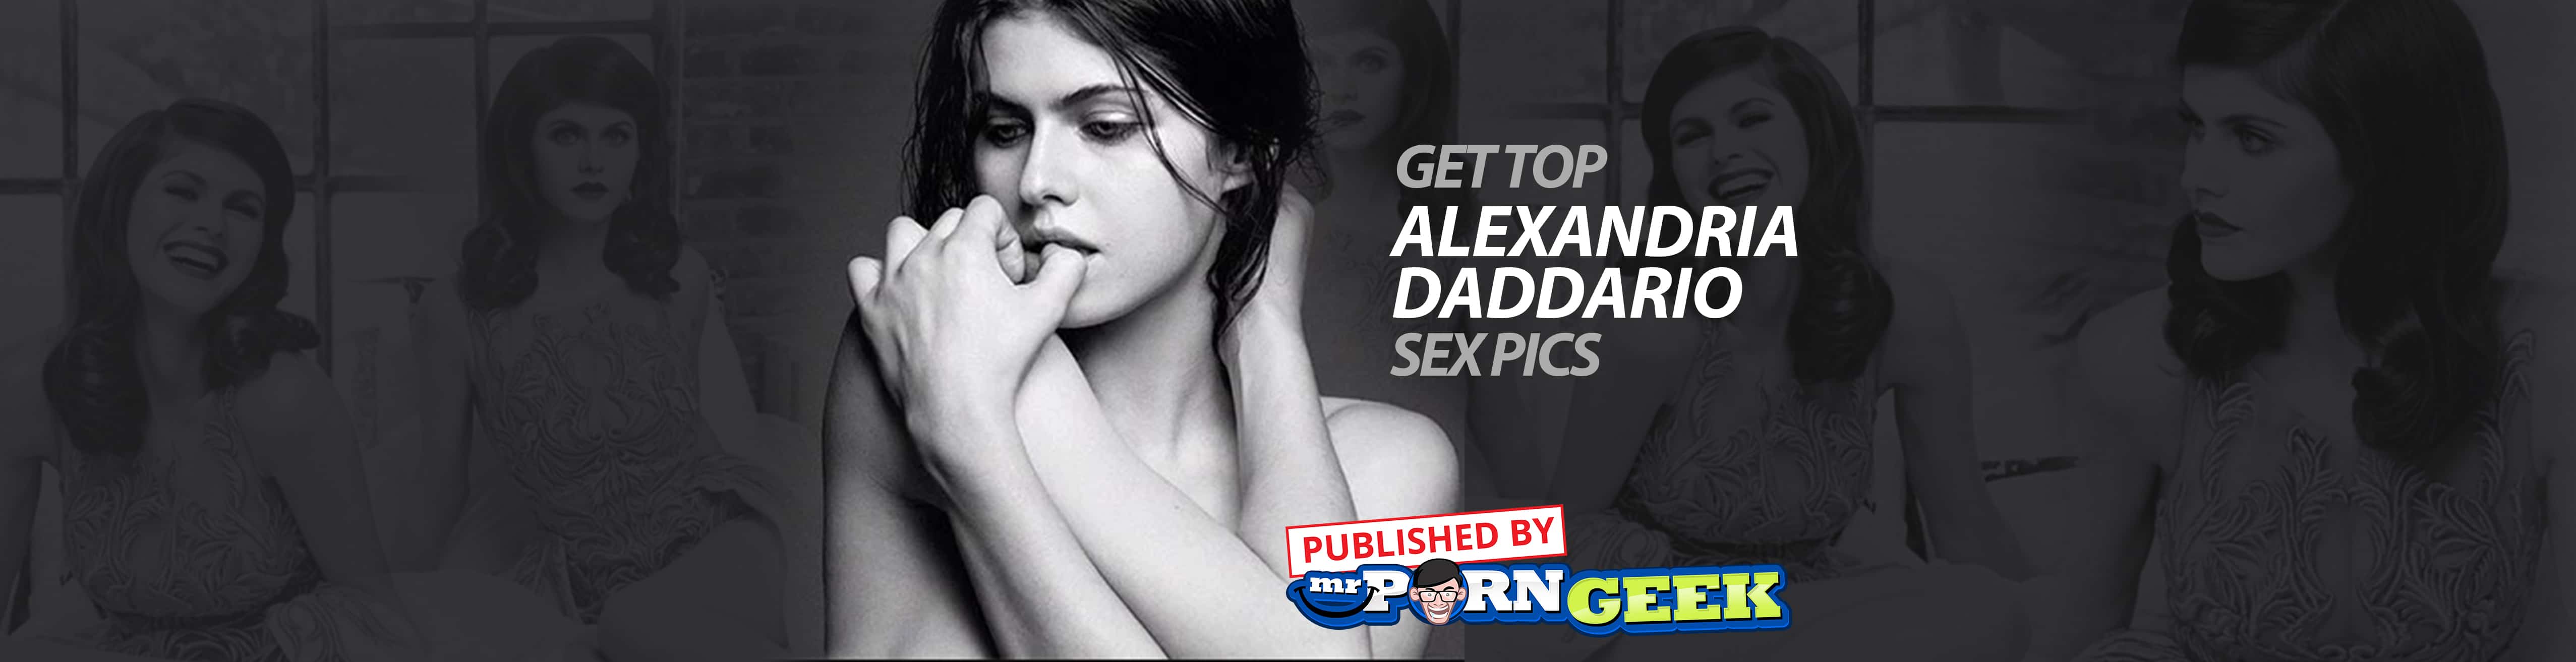 Xxx Video Blogger - Get Top Alexandria Daddario Nudes - Sex Pics And Naked Videos